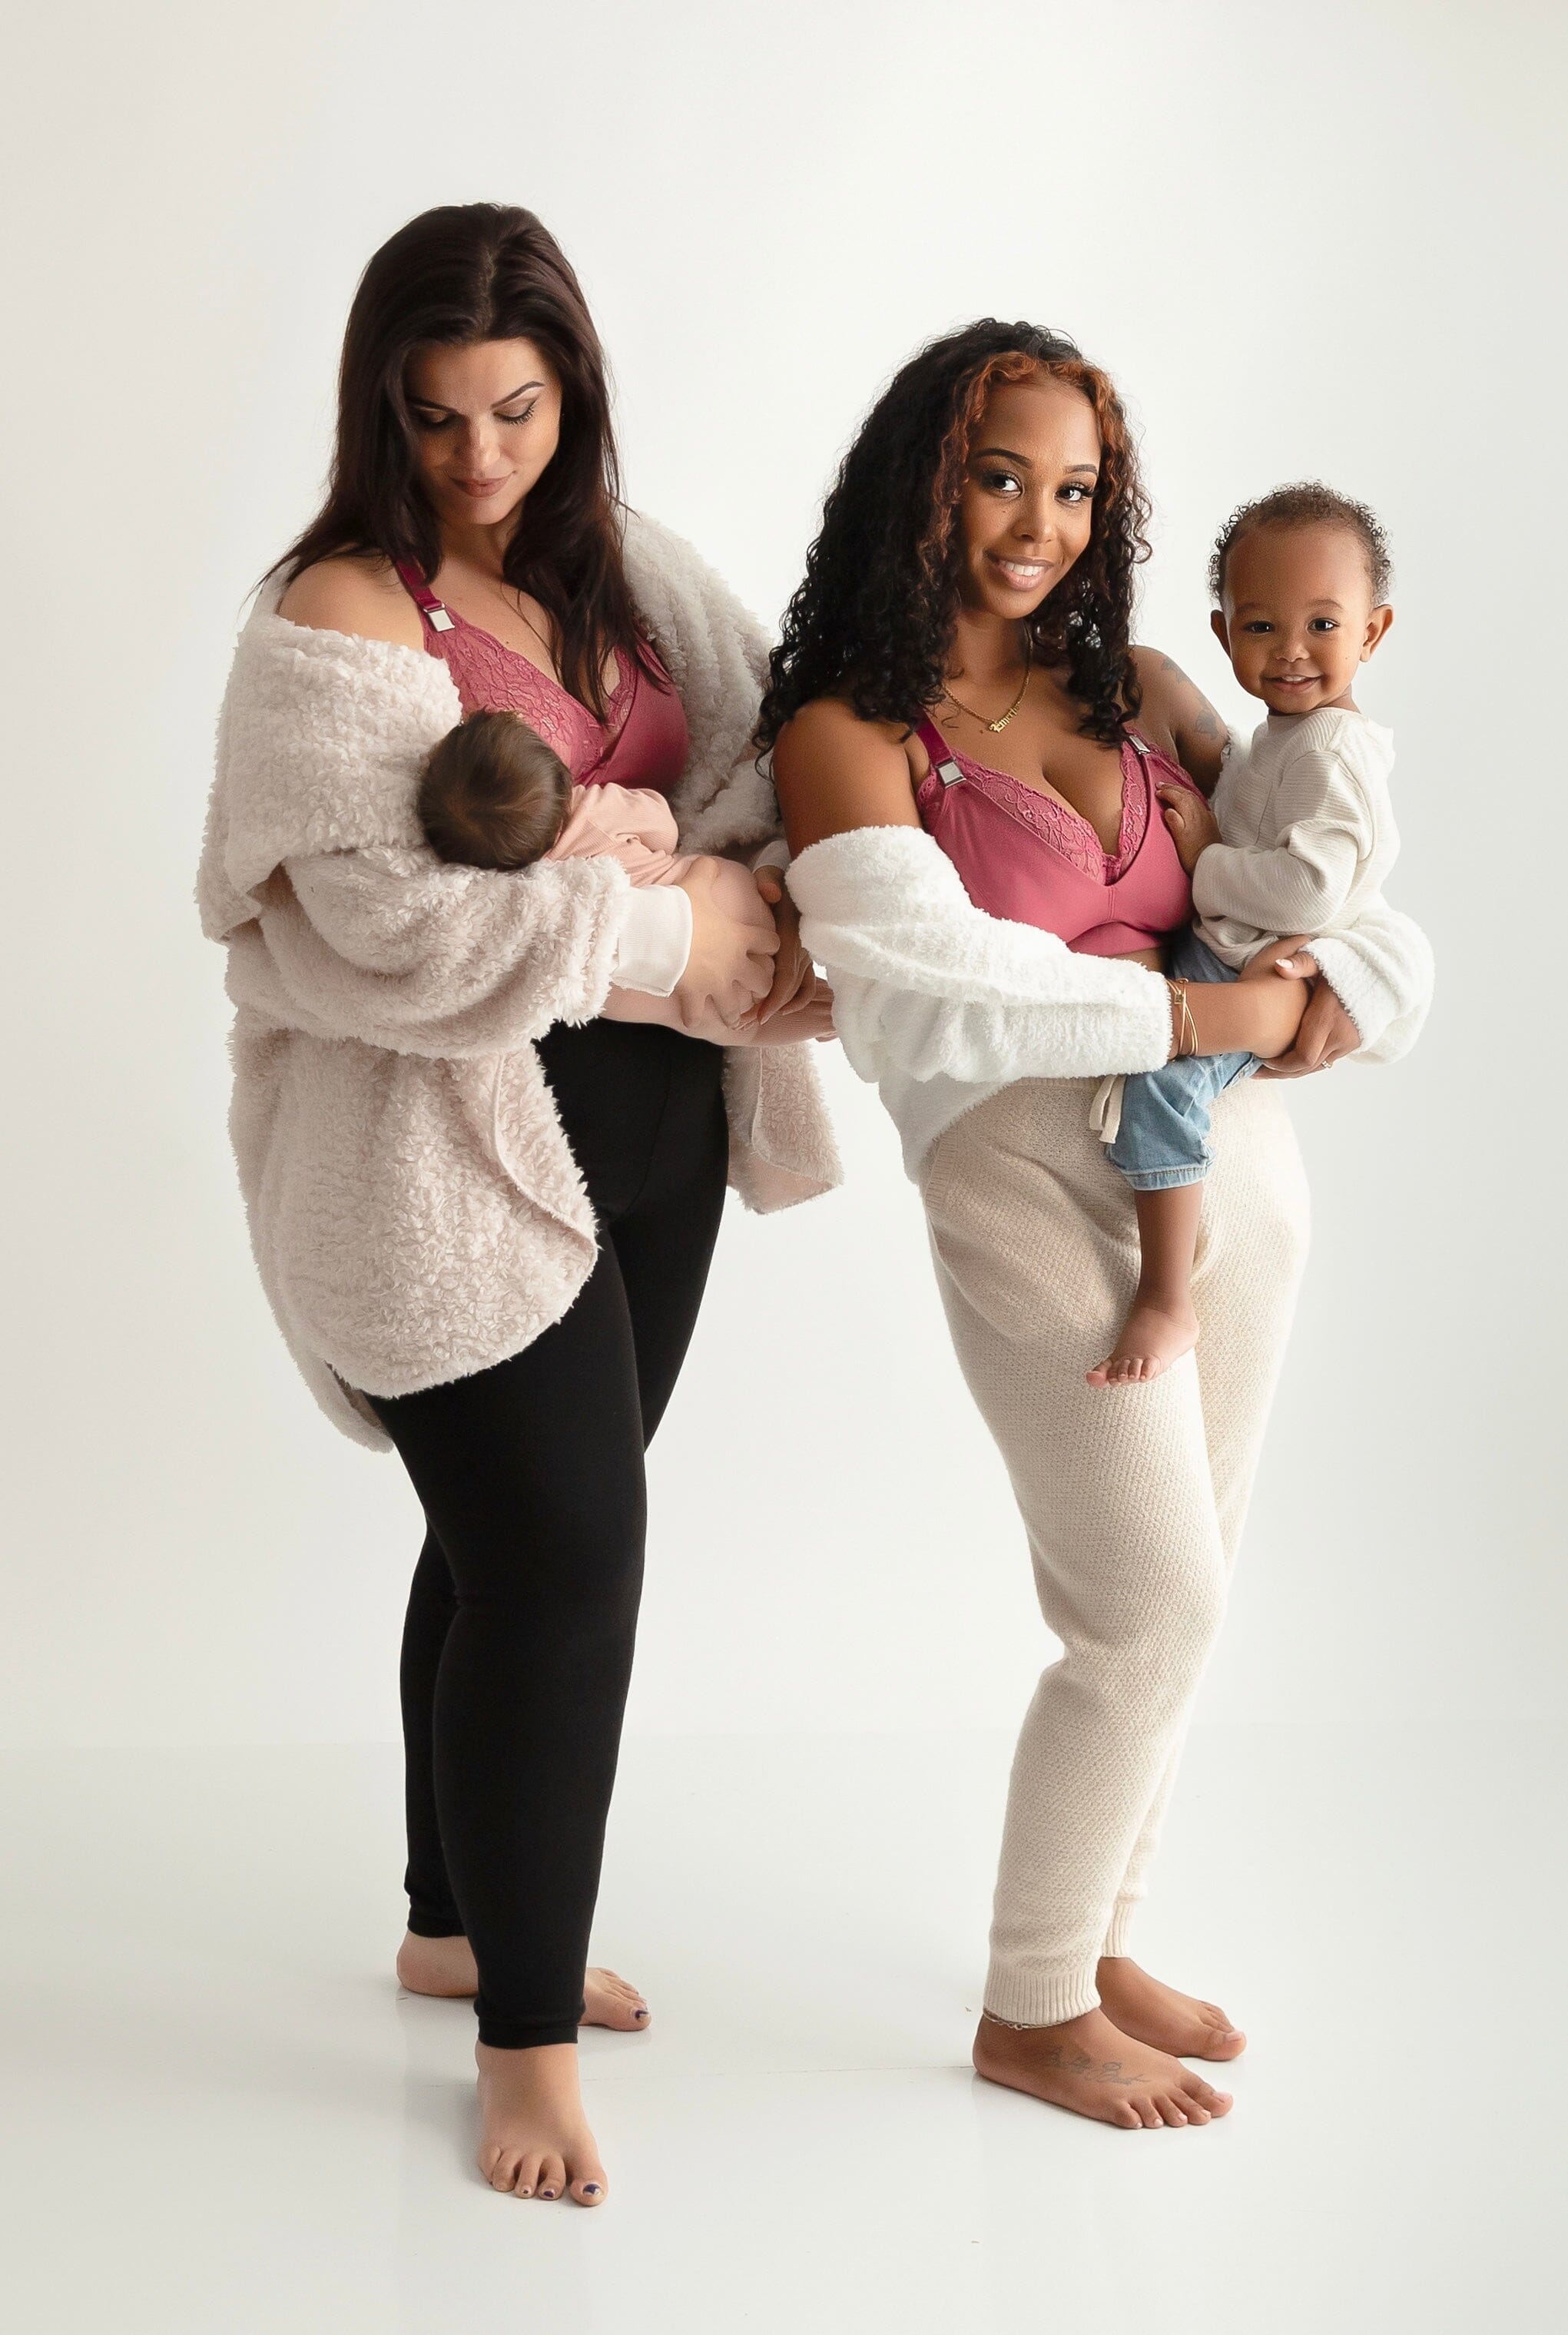  ZYLDDP Women's Bra Plus Size Cotton Nursing Bra， Breastfeeding  Maternity Wireless Lace Bralette (Color : White, Size : 46B) : Clothing,  Shoes & Jewelry